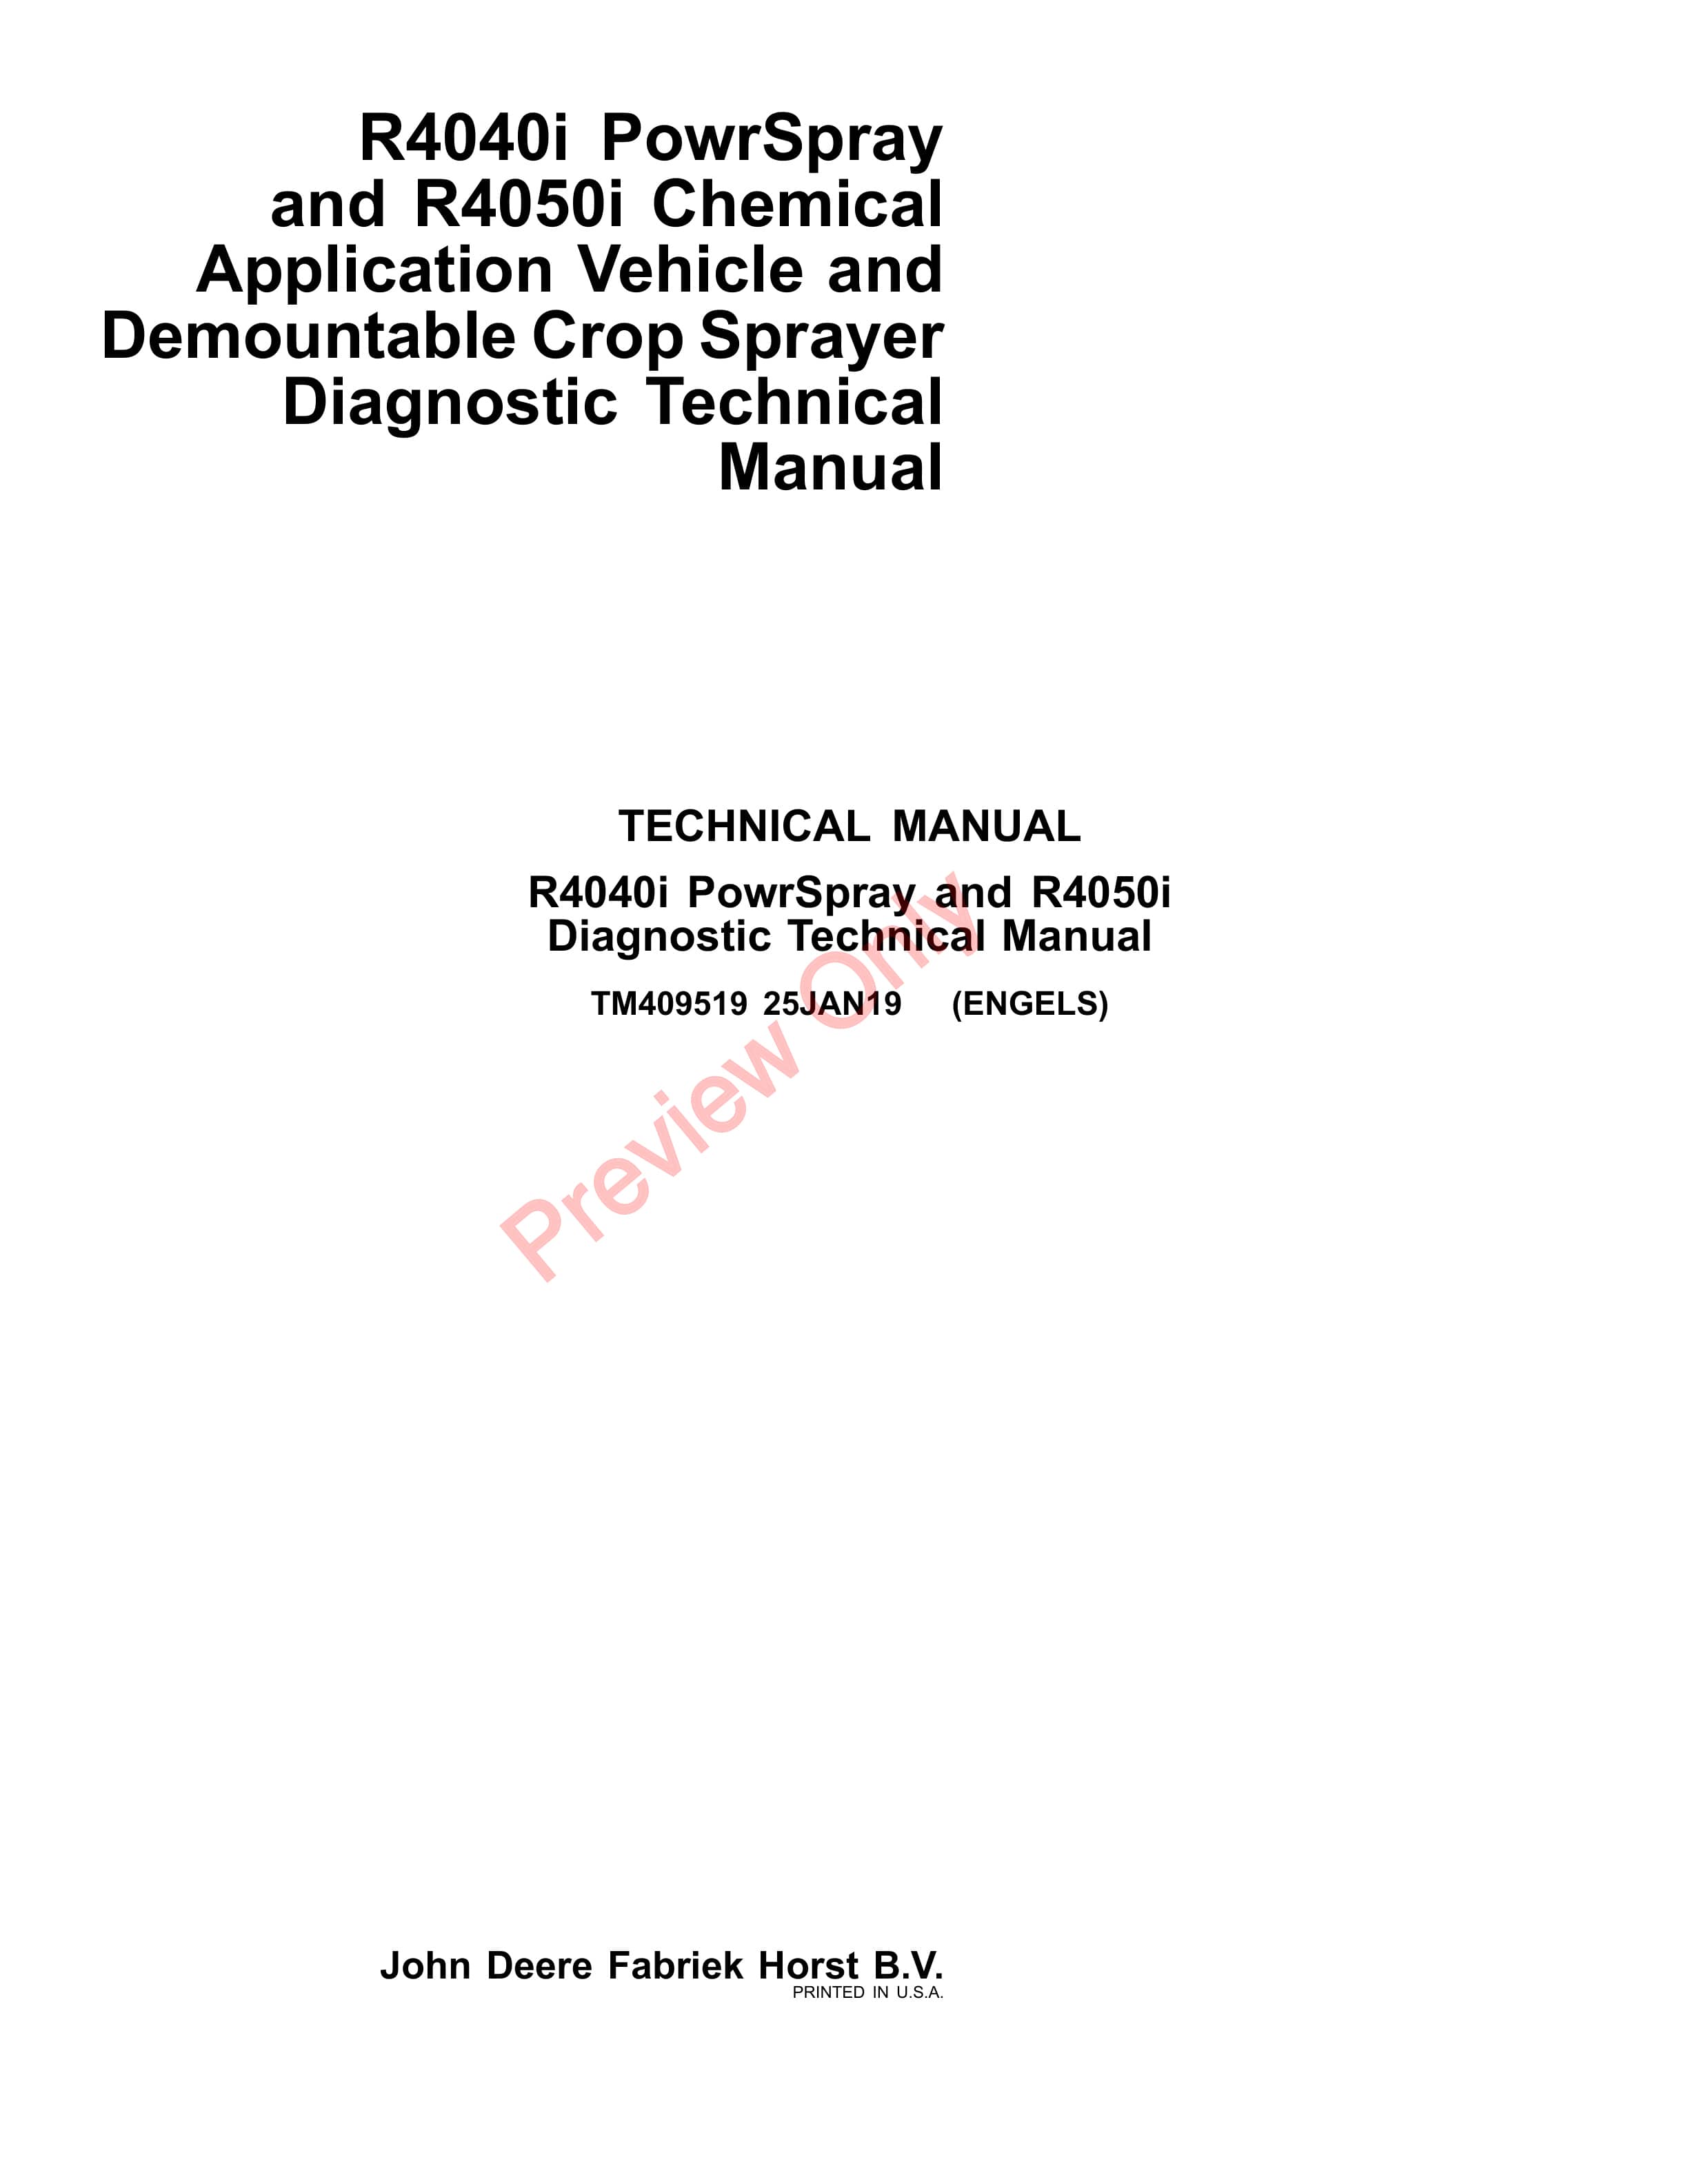 John Deere R4040i PowrSpray and R4050i Chemical ApplicationVehicle and Demountable Crop Sprayers Diagnostic Technical Manual TM409519 25JAN19 1